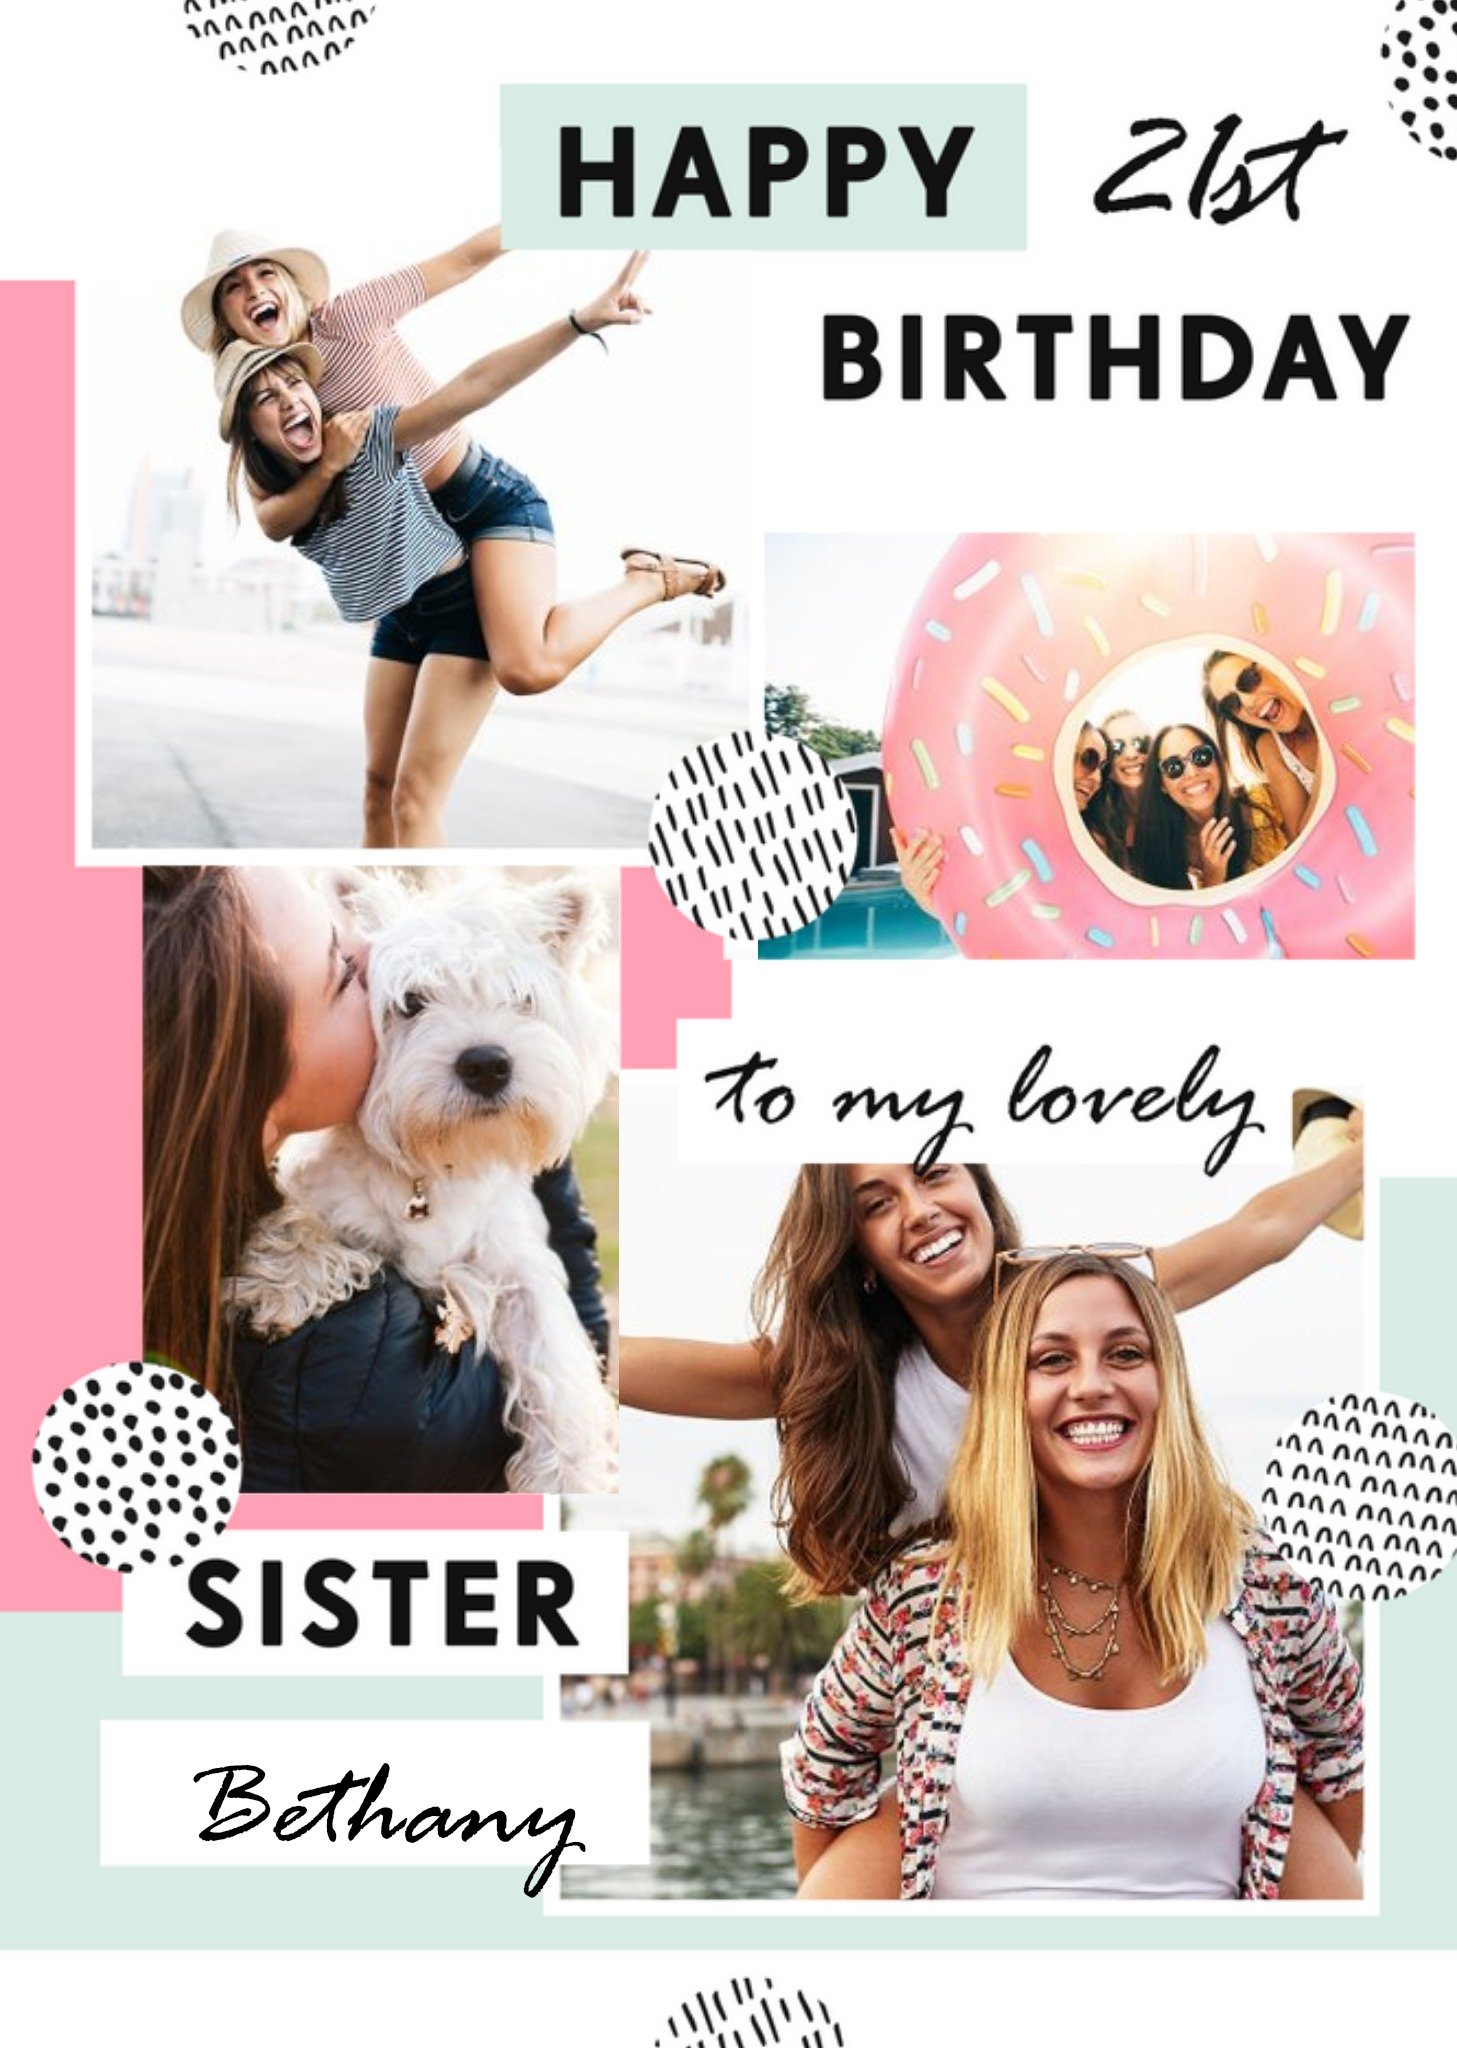 Moonpig Happy 21st Birthday To My Lovely Sister Multi Photo Upload Card Ecard